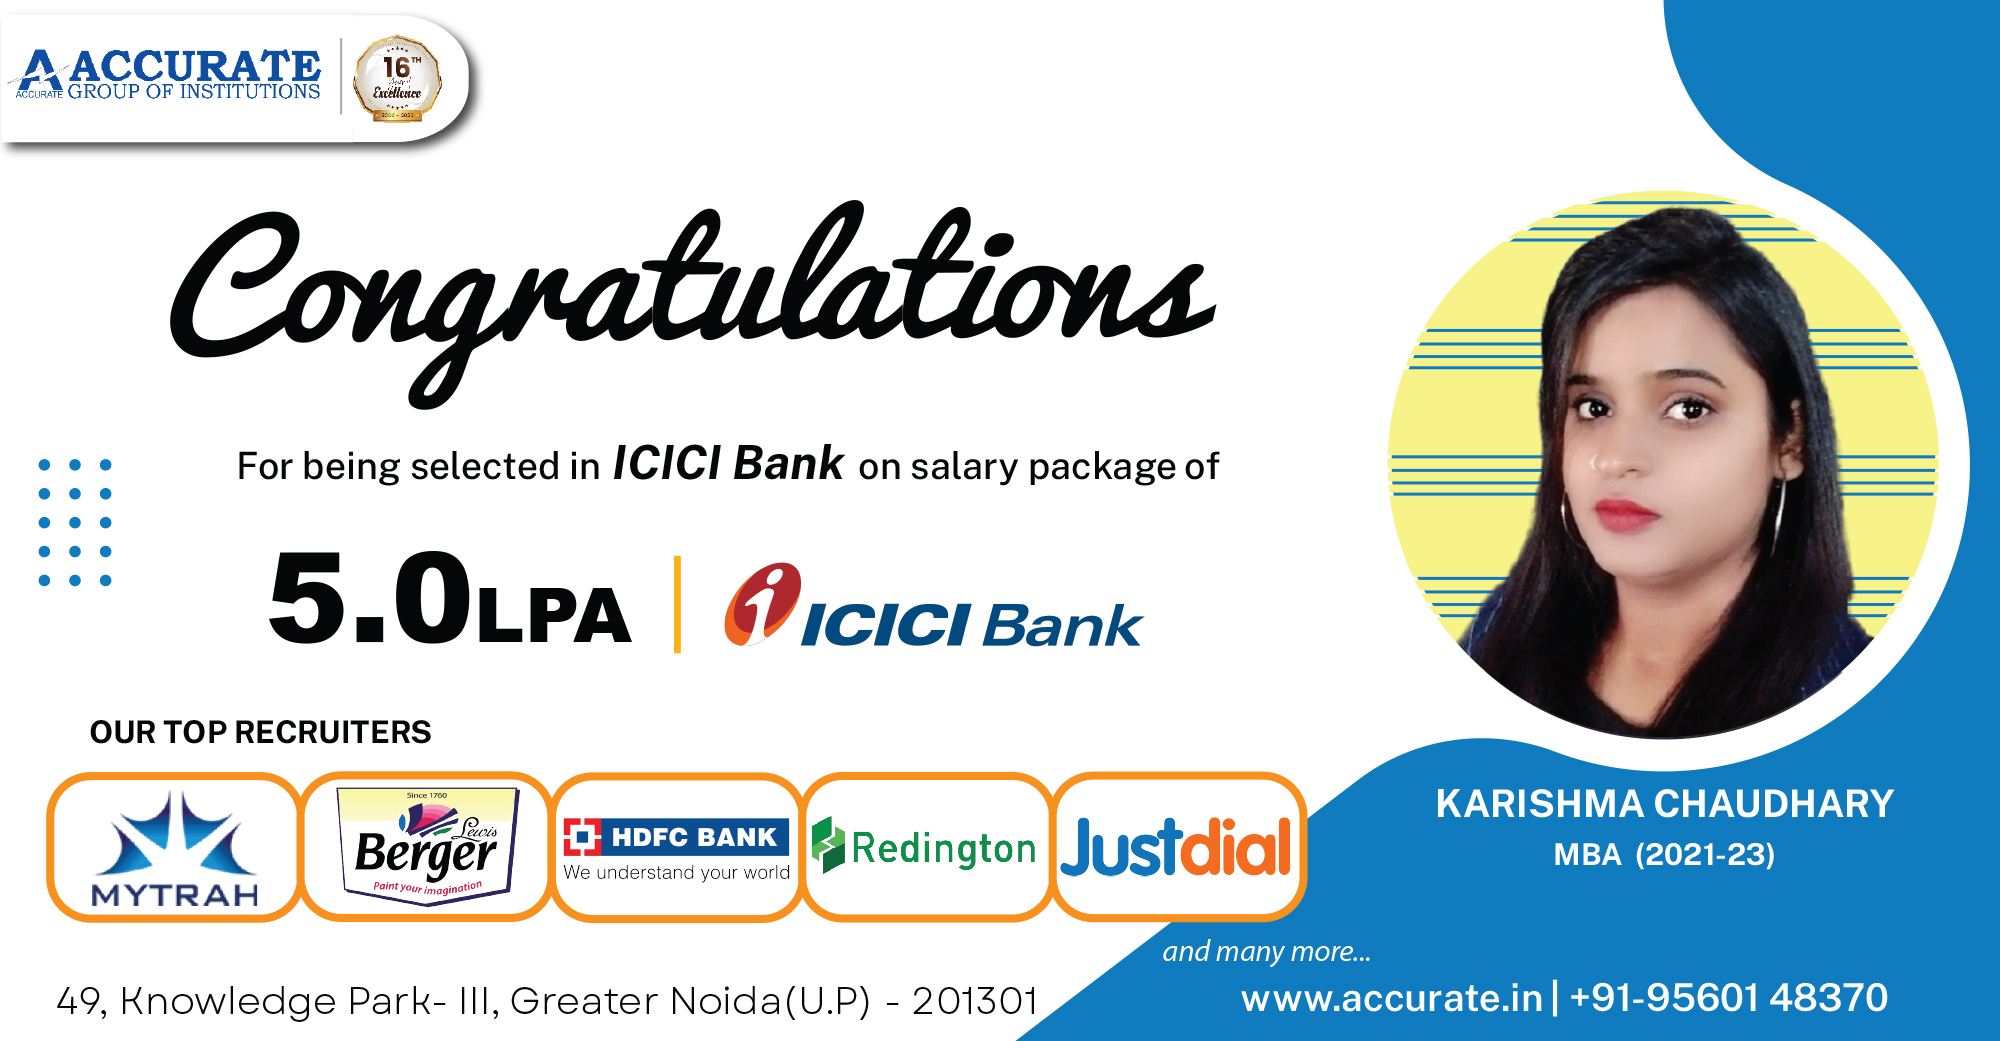 Karishma Chaudhary selected by ICICI Bank